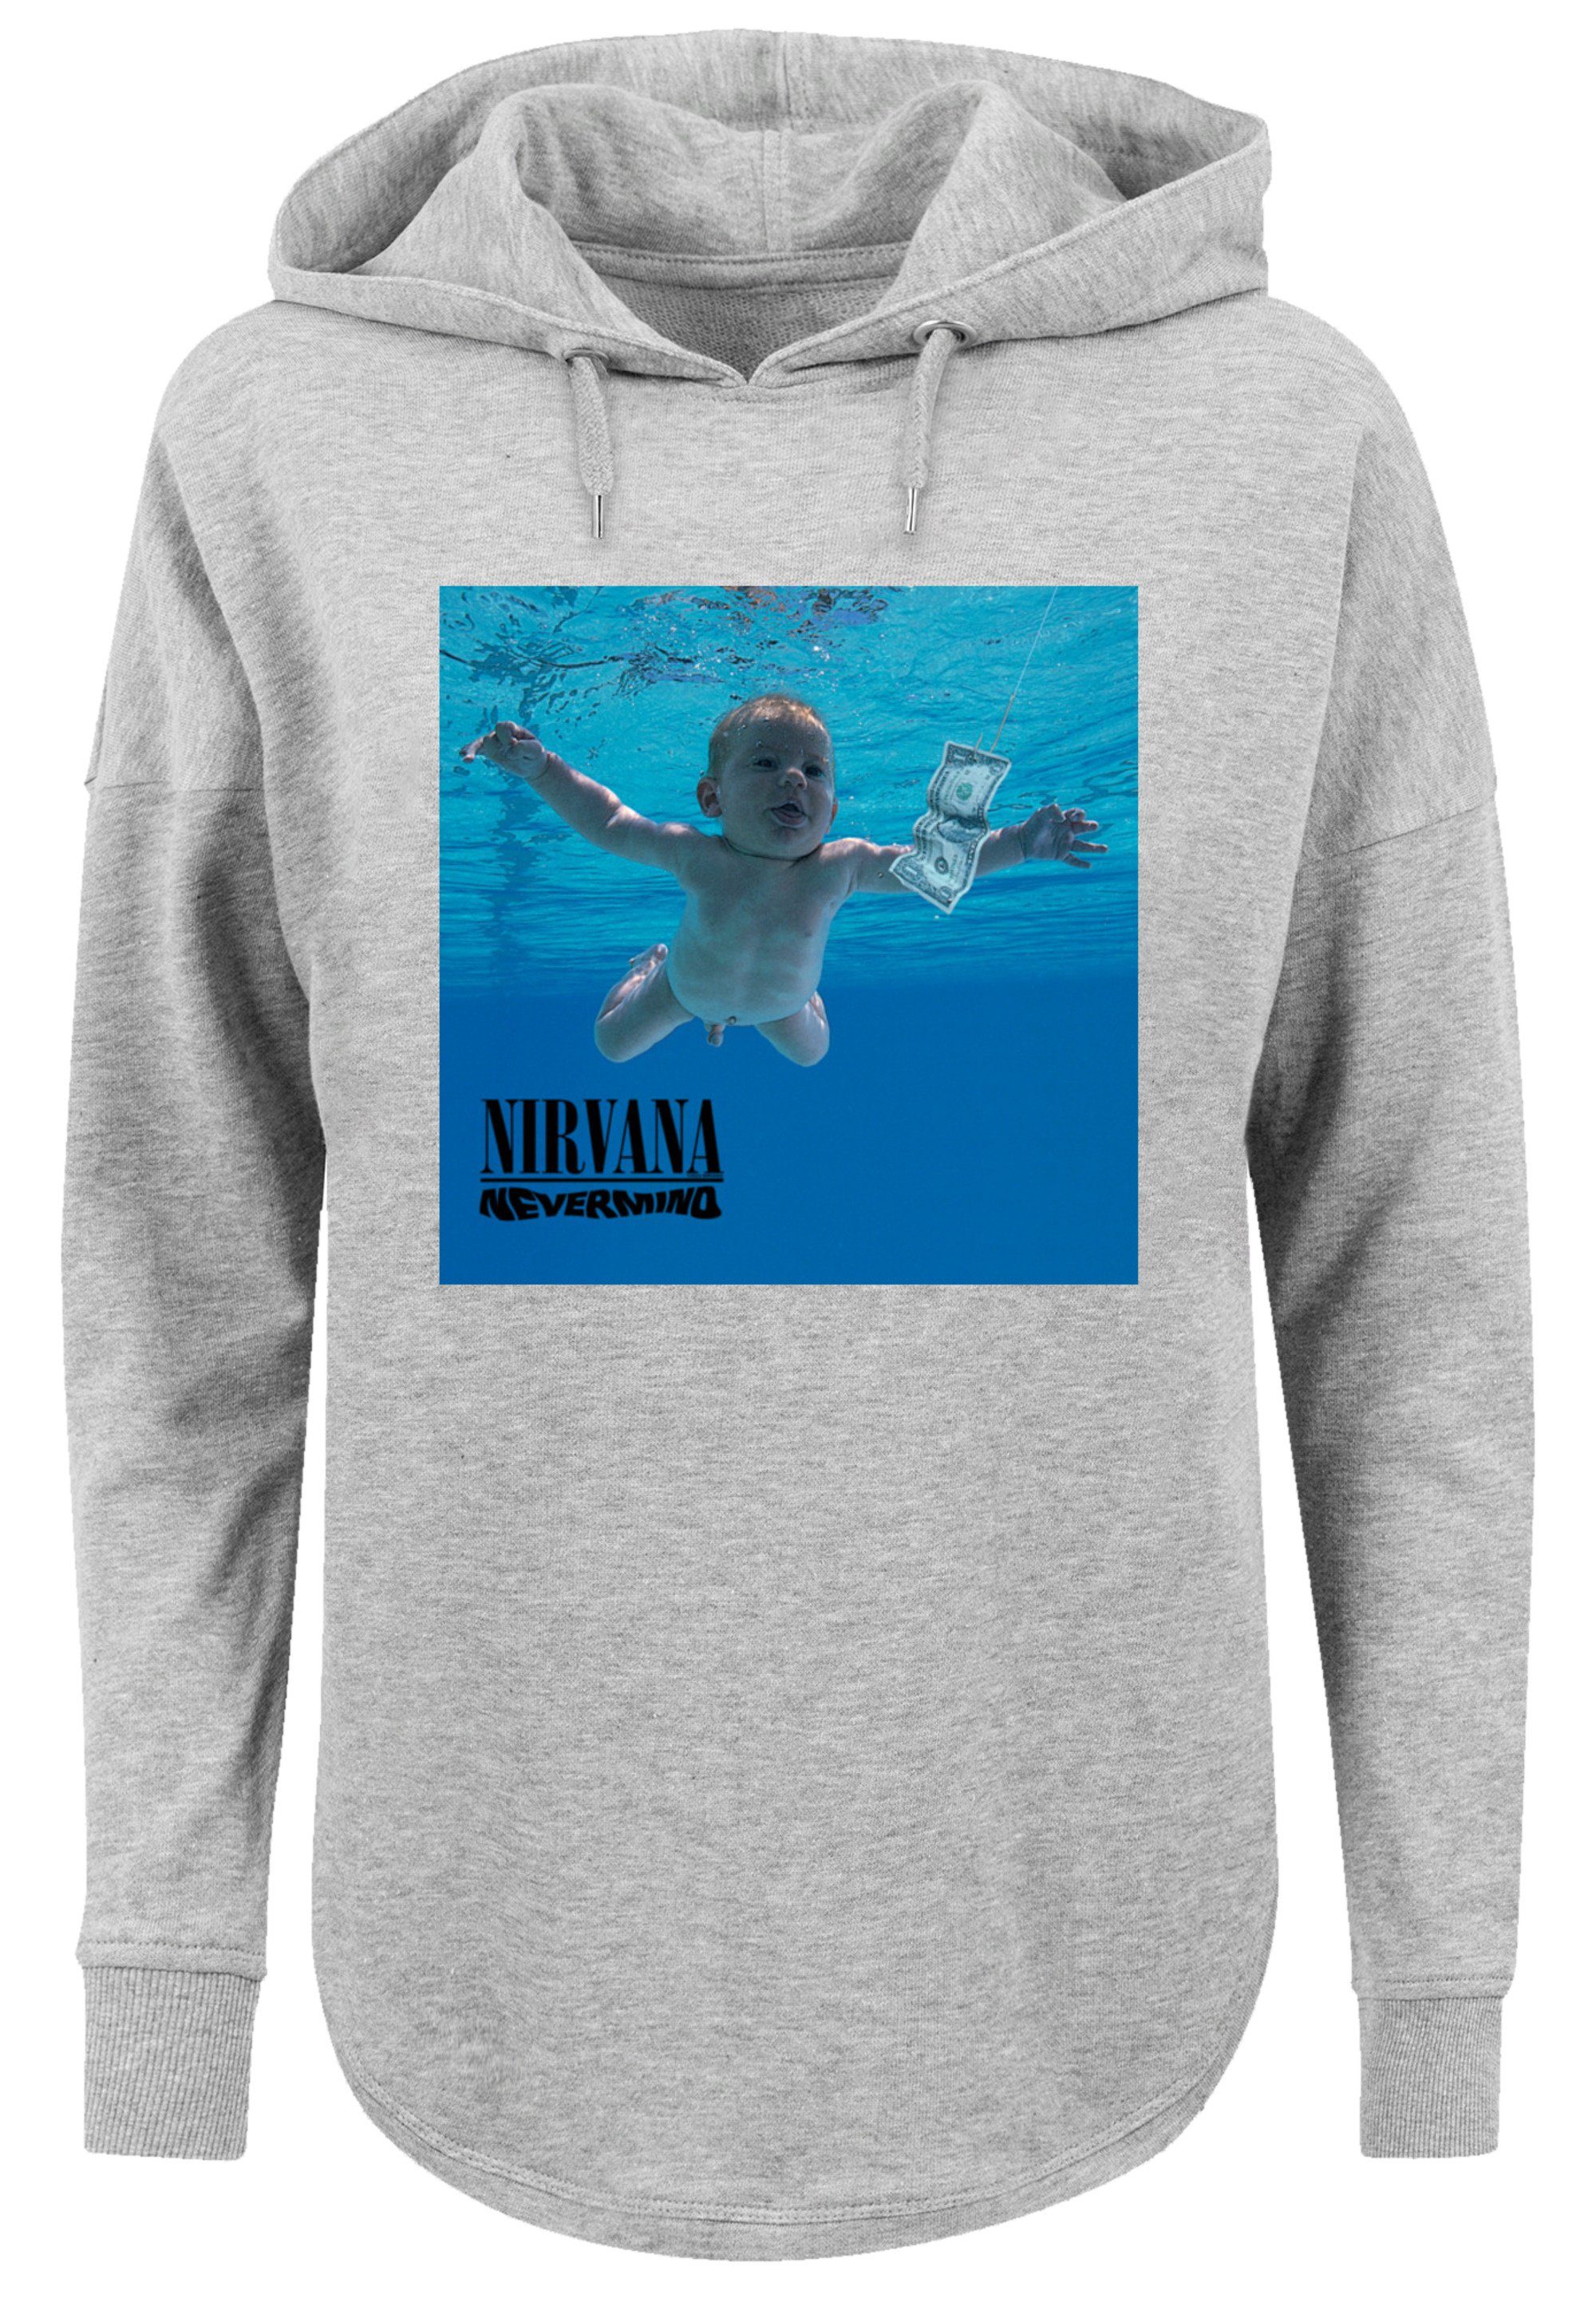 F4NT4STIC Sweatshirt Premium grey Nirvana Nevermind Band Album Qualität Rock